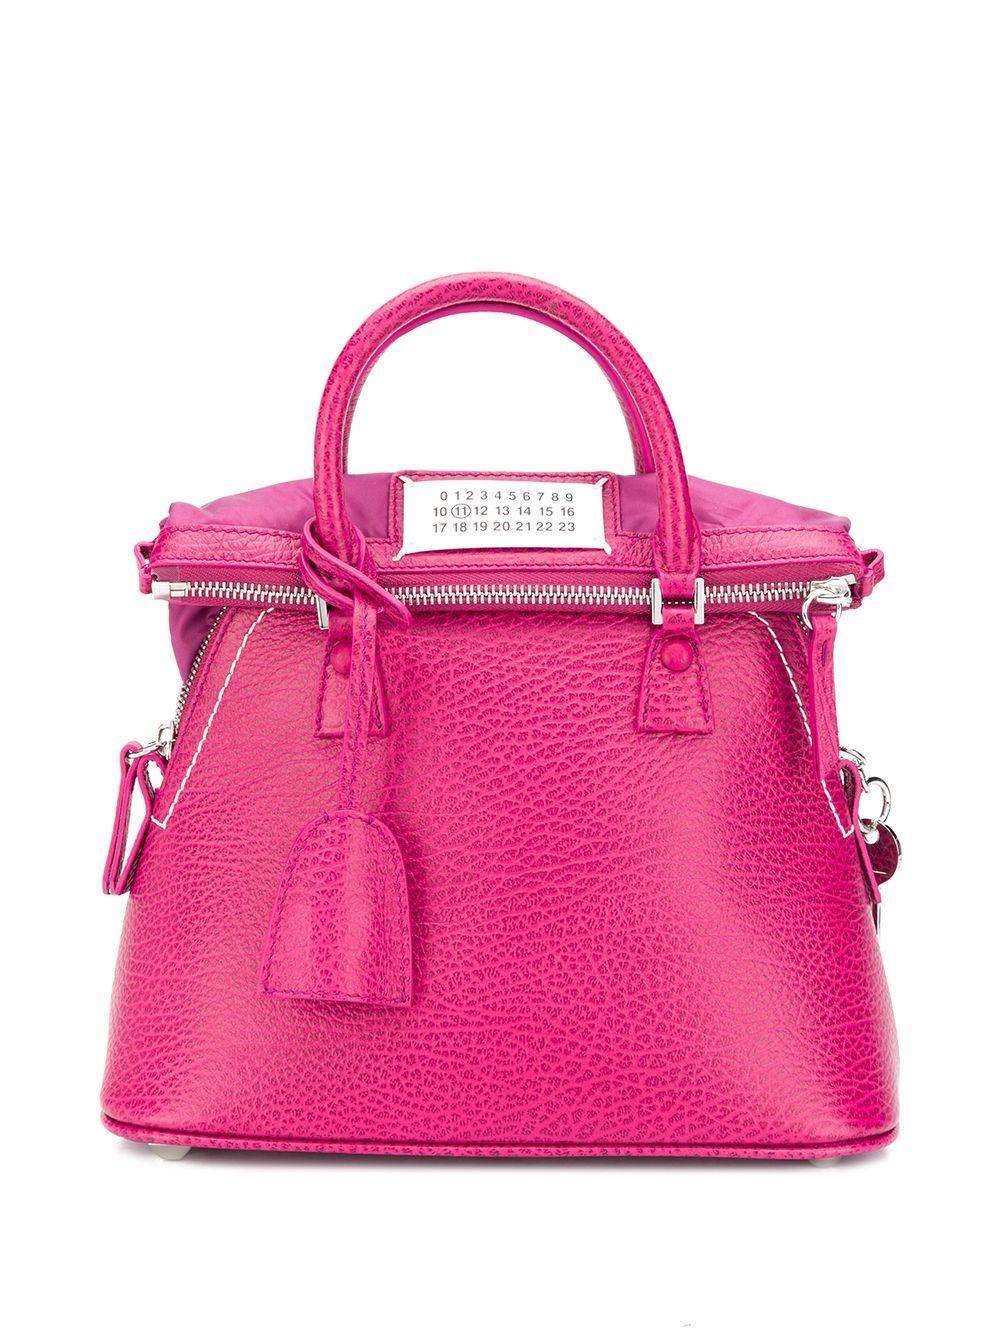 Maison Margiela Cotton 5ac Mini Tote Bag in Pink - Lyst